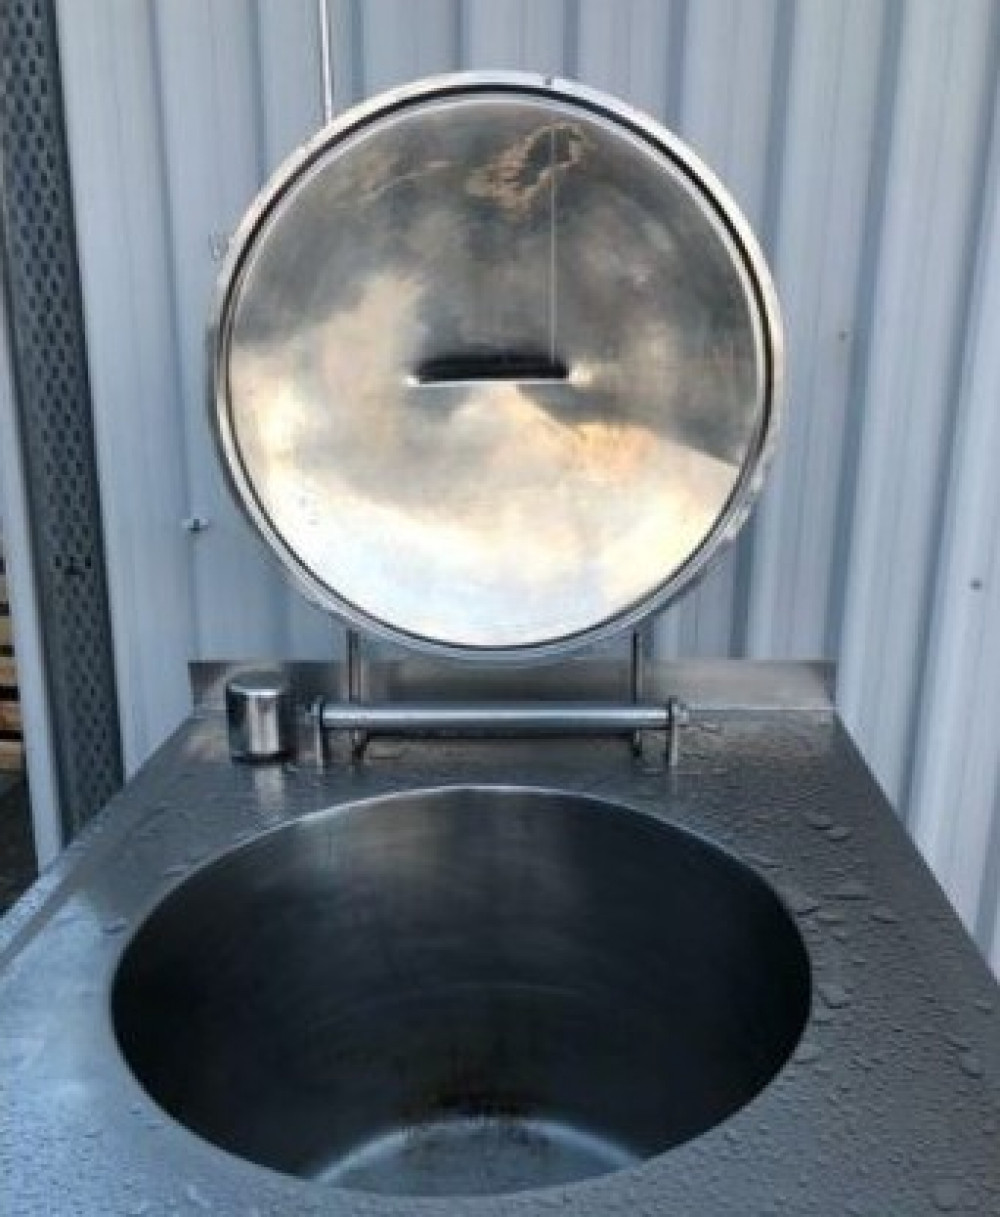 Electric Boiling Pan 2